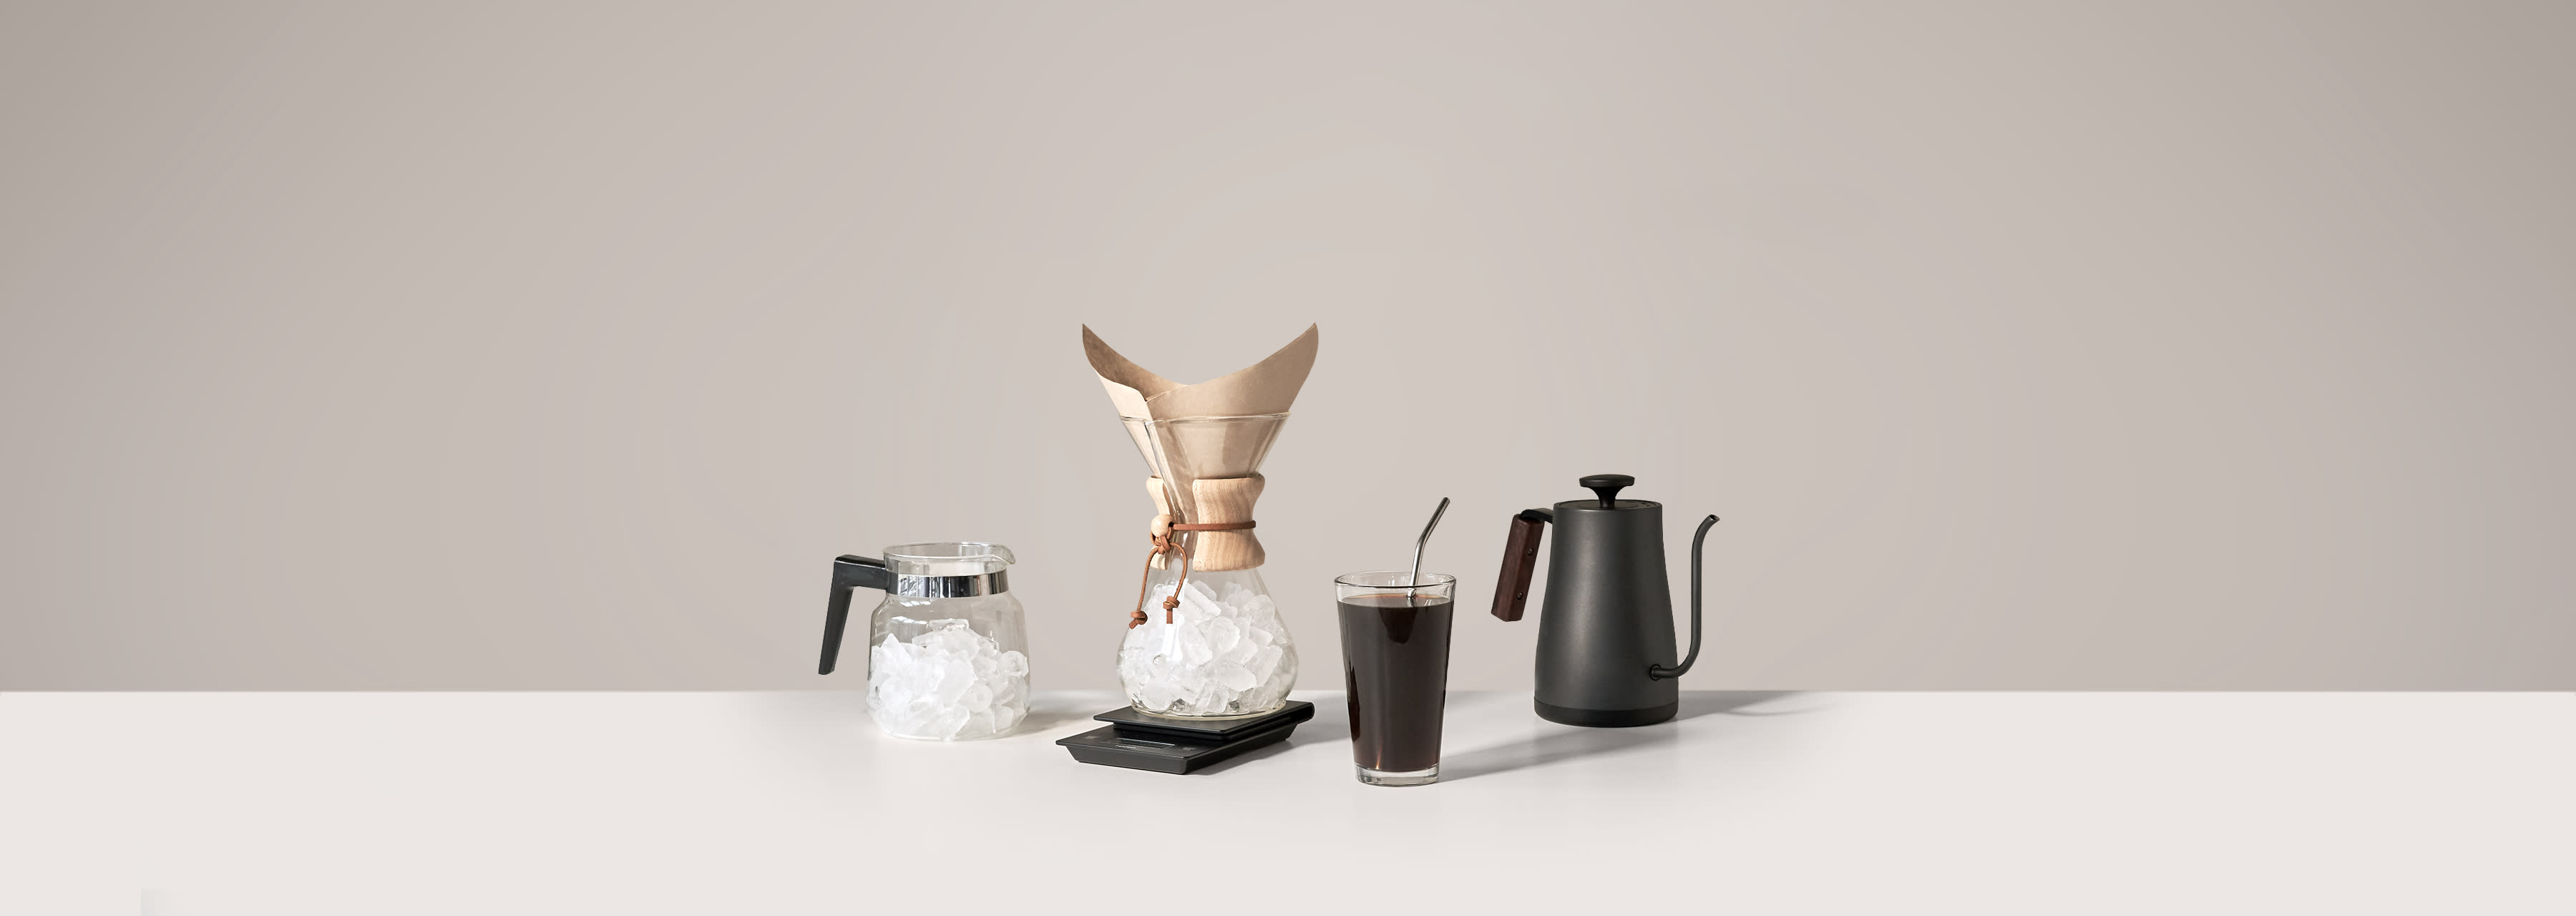 How to Make Iced Coffee at Home | Trade Coffee Co | Trade Coffee